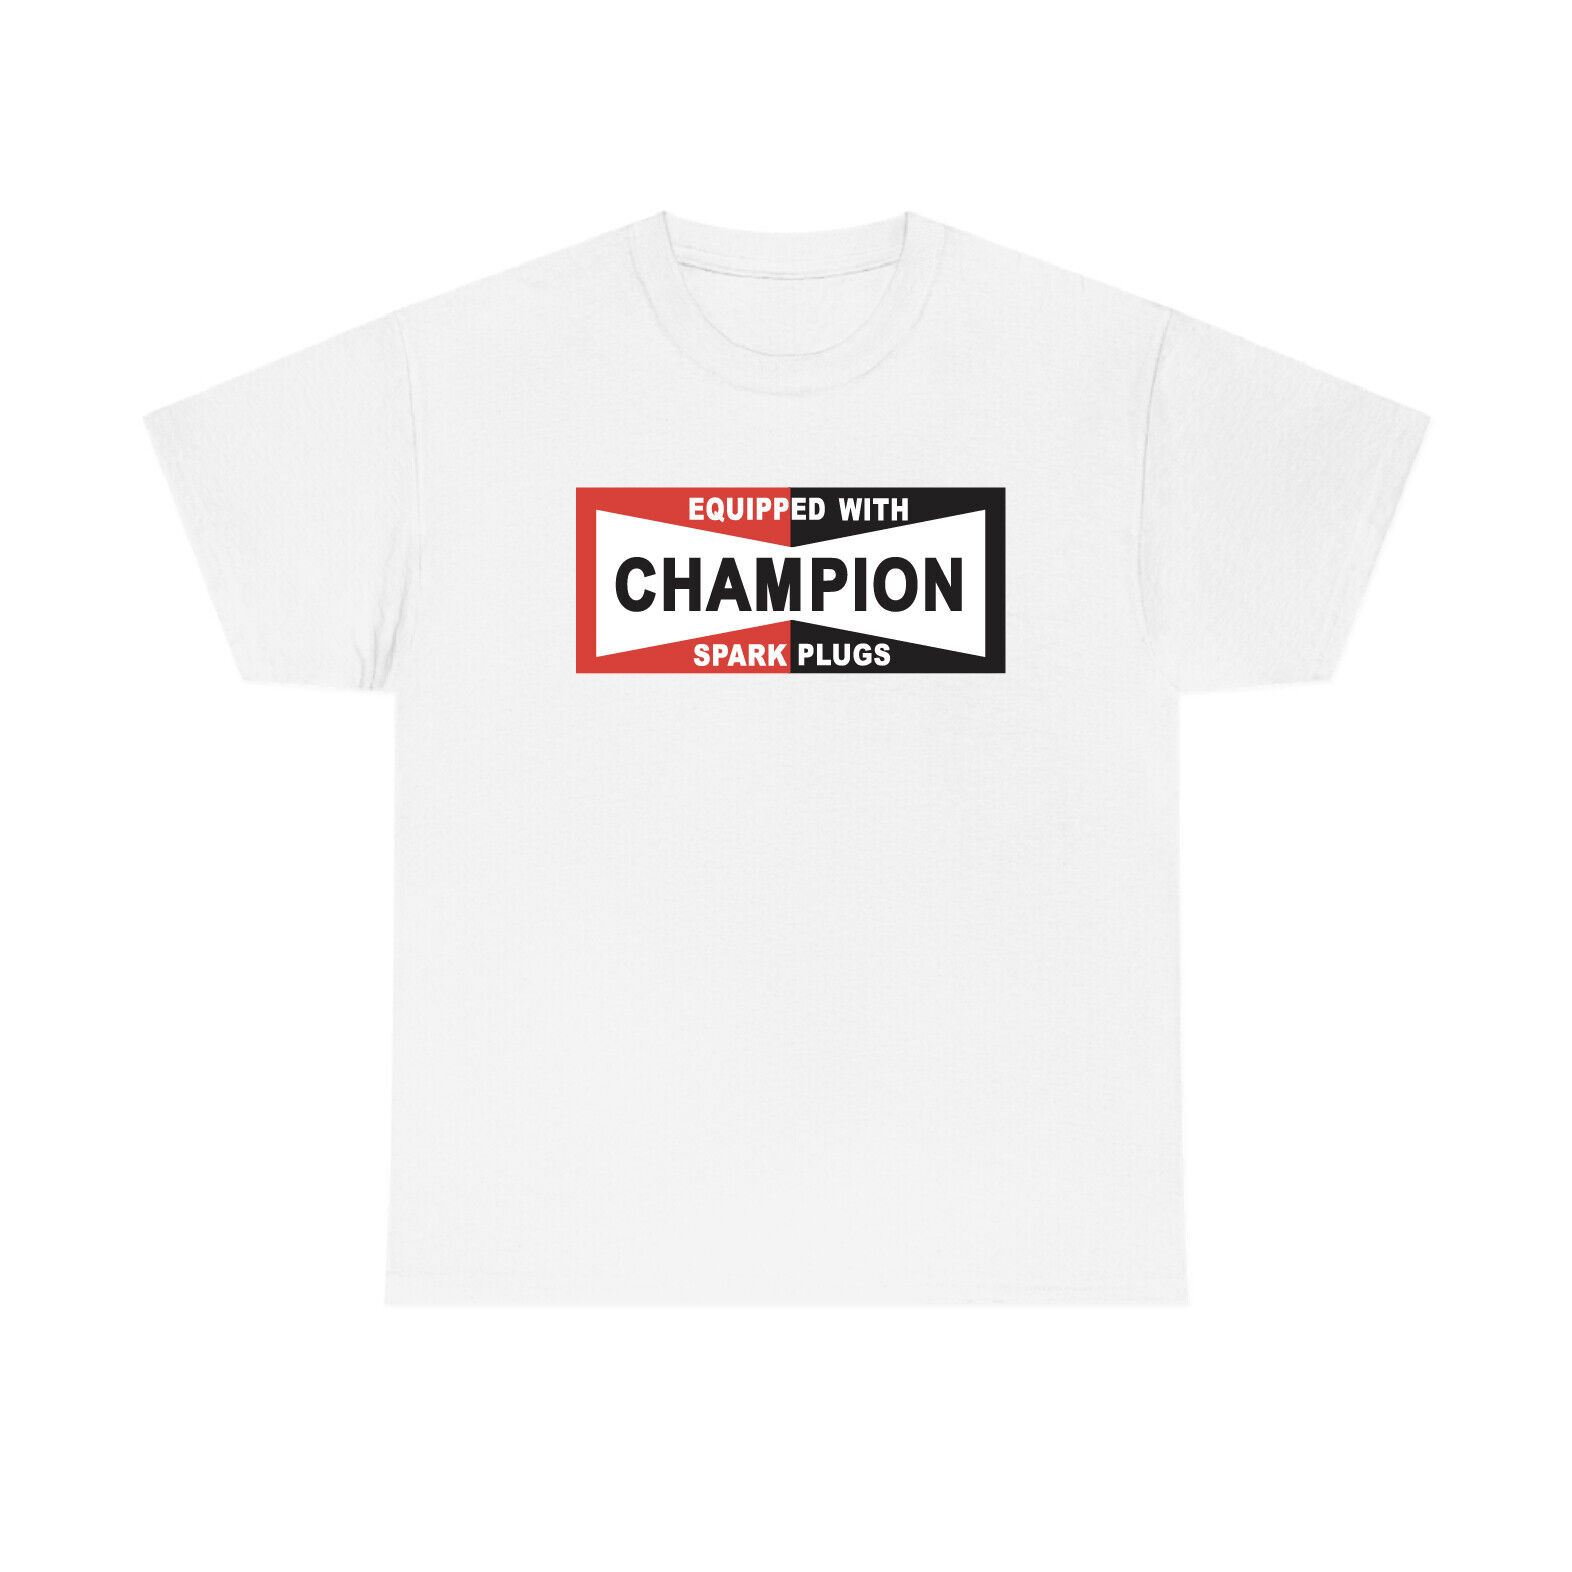 Champion Spark Plugs T-Shirt-White tee